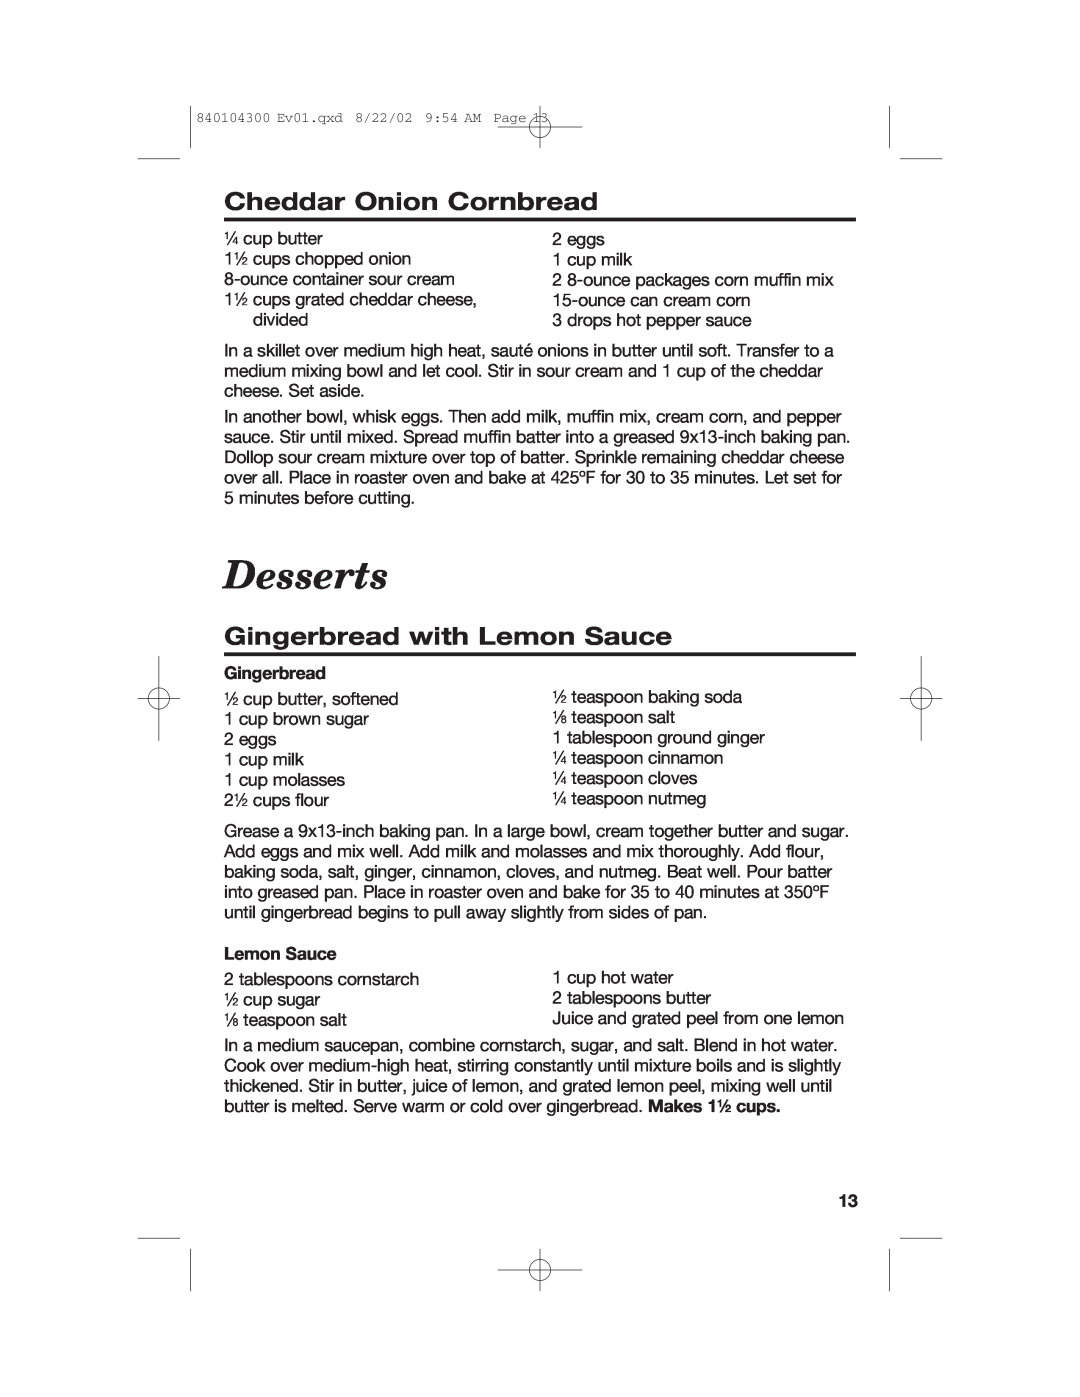 Hamilton Beach 32180C manual Desserts, Cheddar Onion Cornbread, Gingerbread with Lemon Sauce 